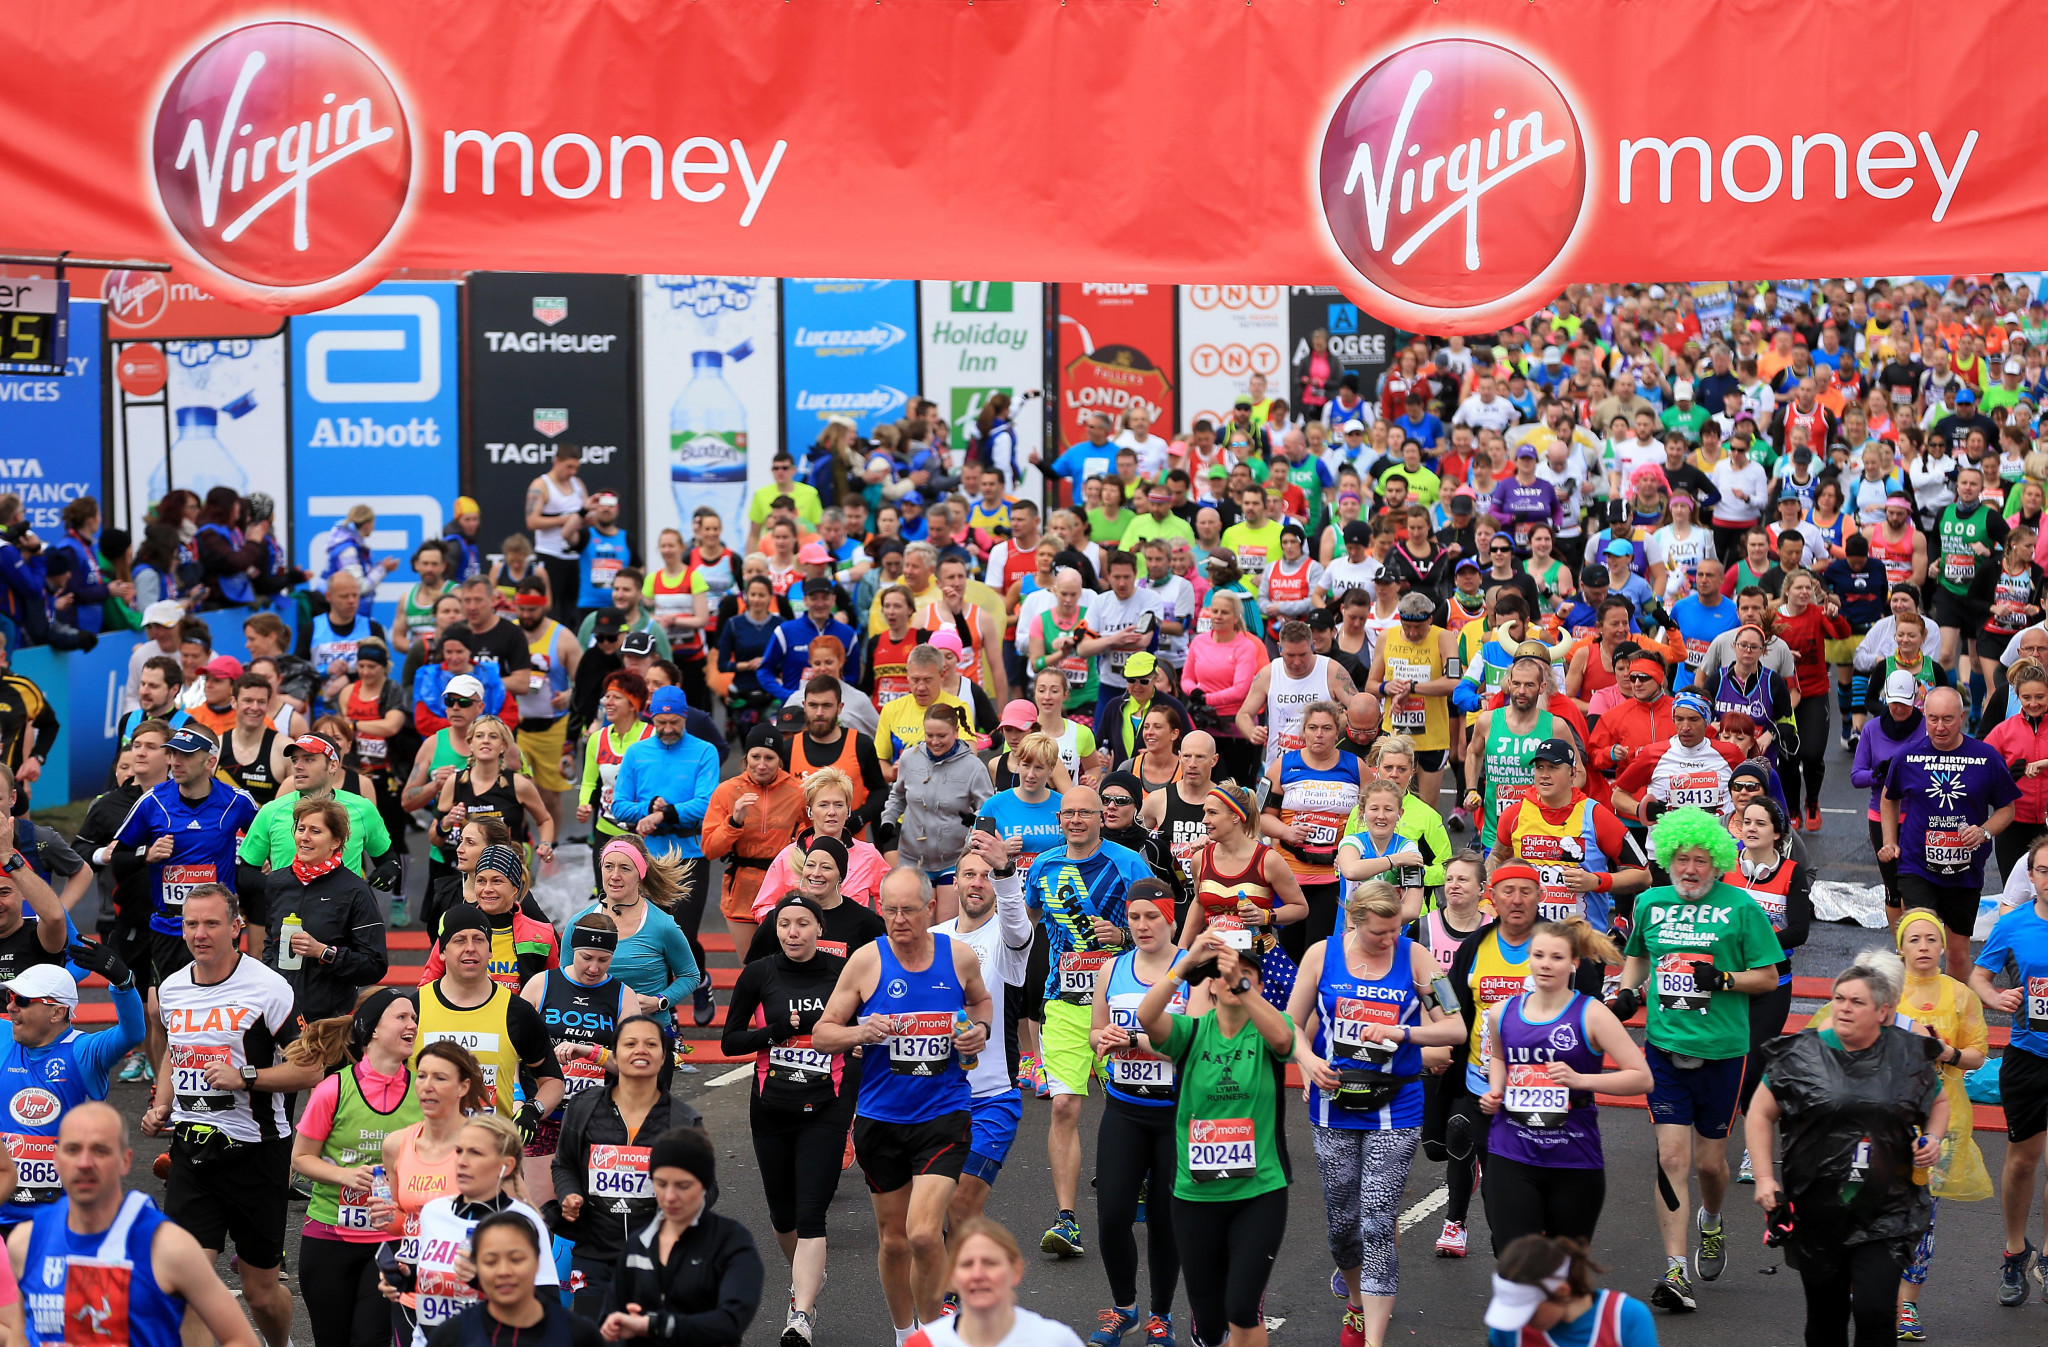 London Marathon organizers will host a COVID-19 test event